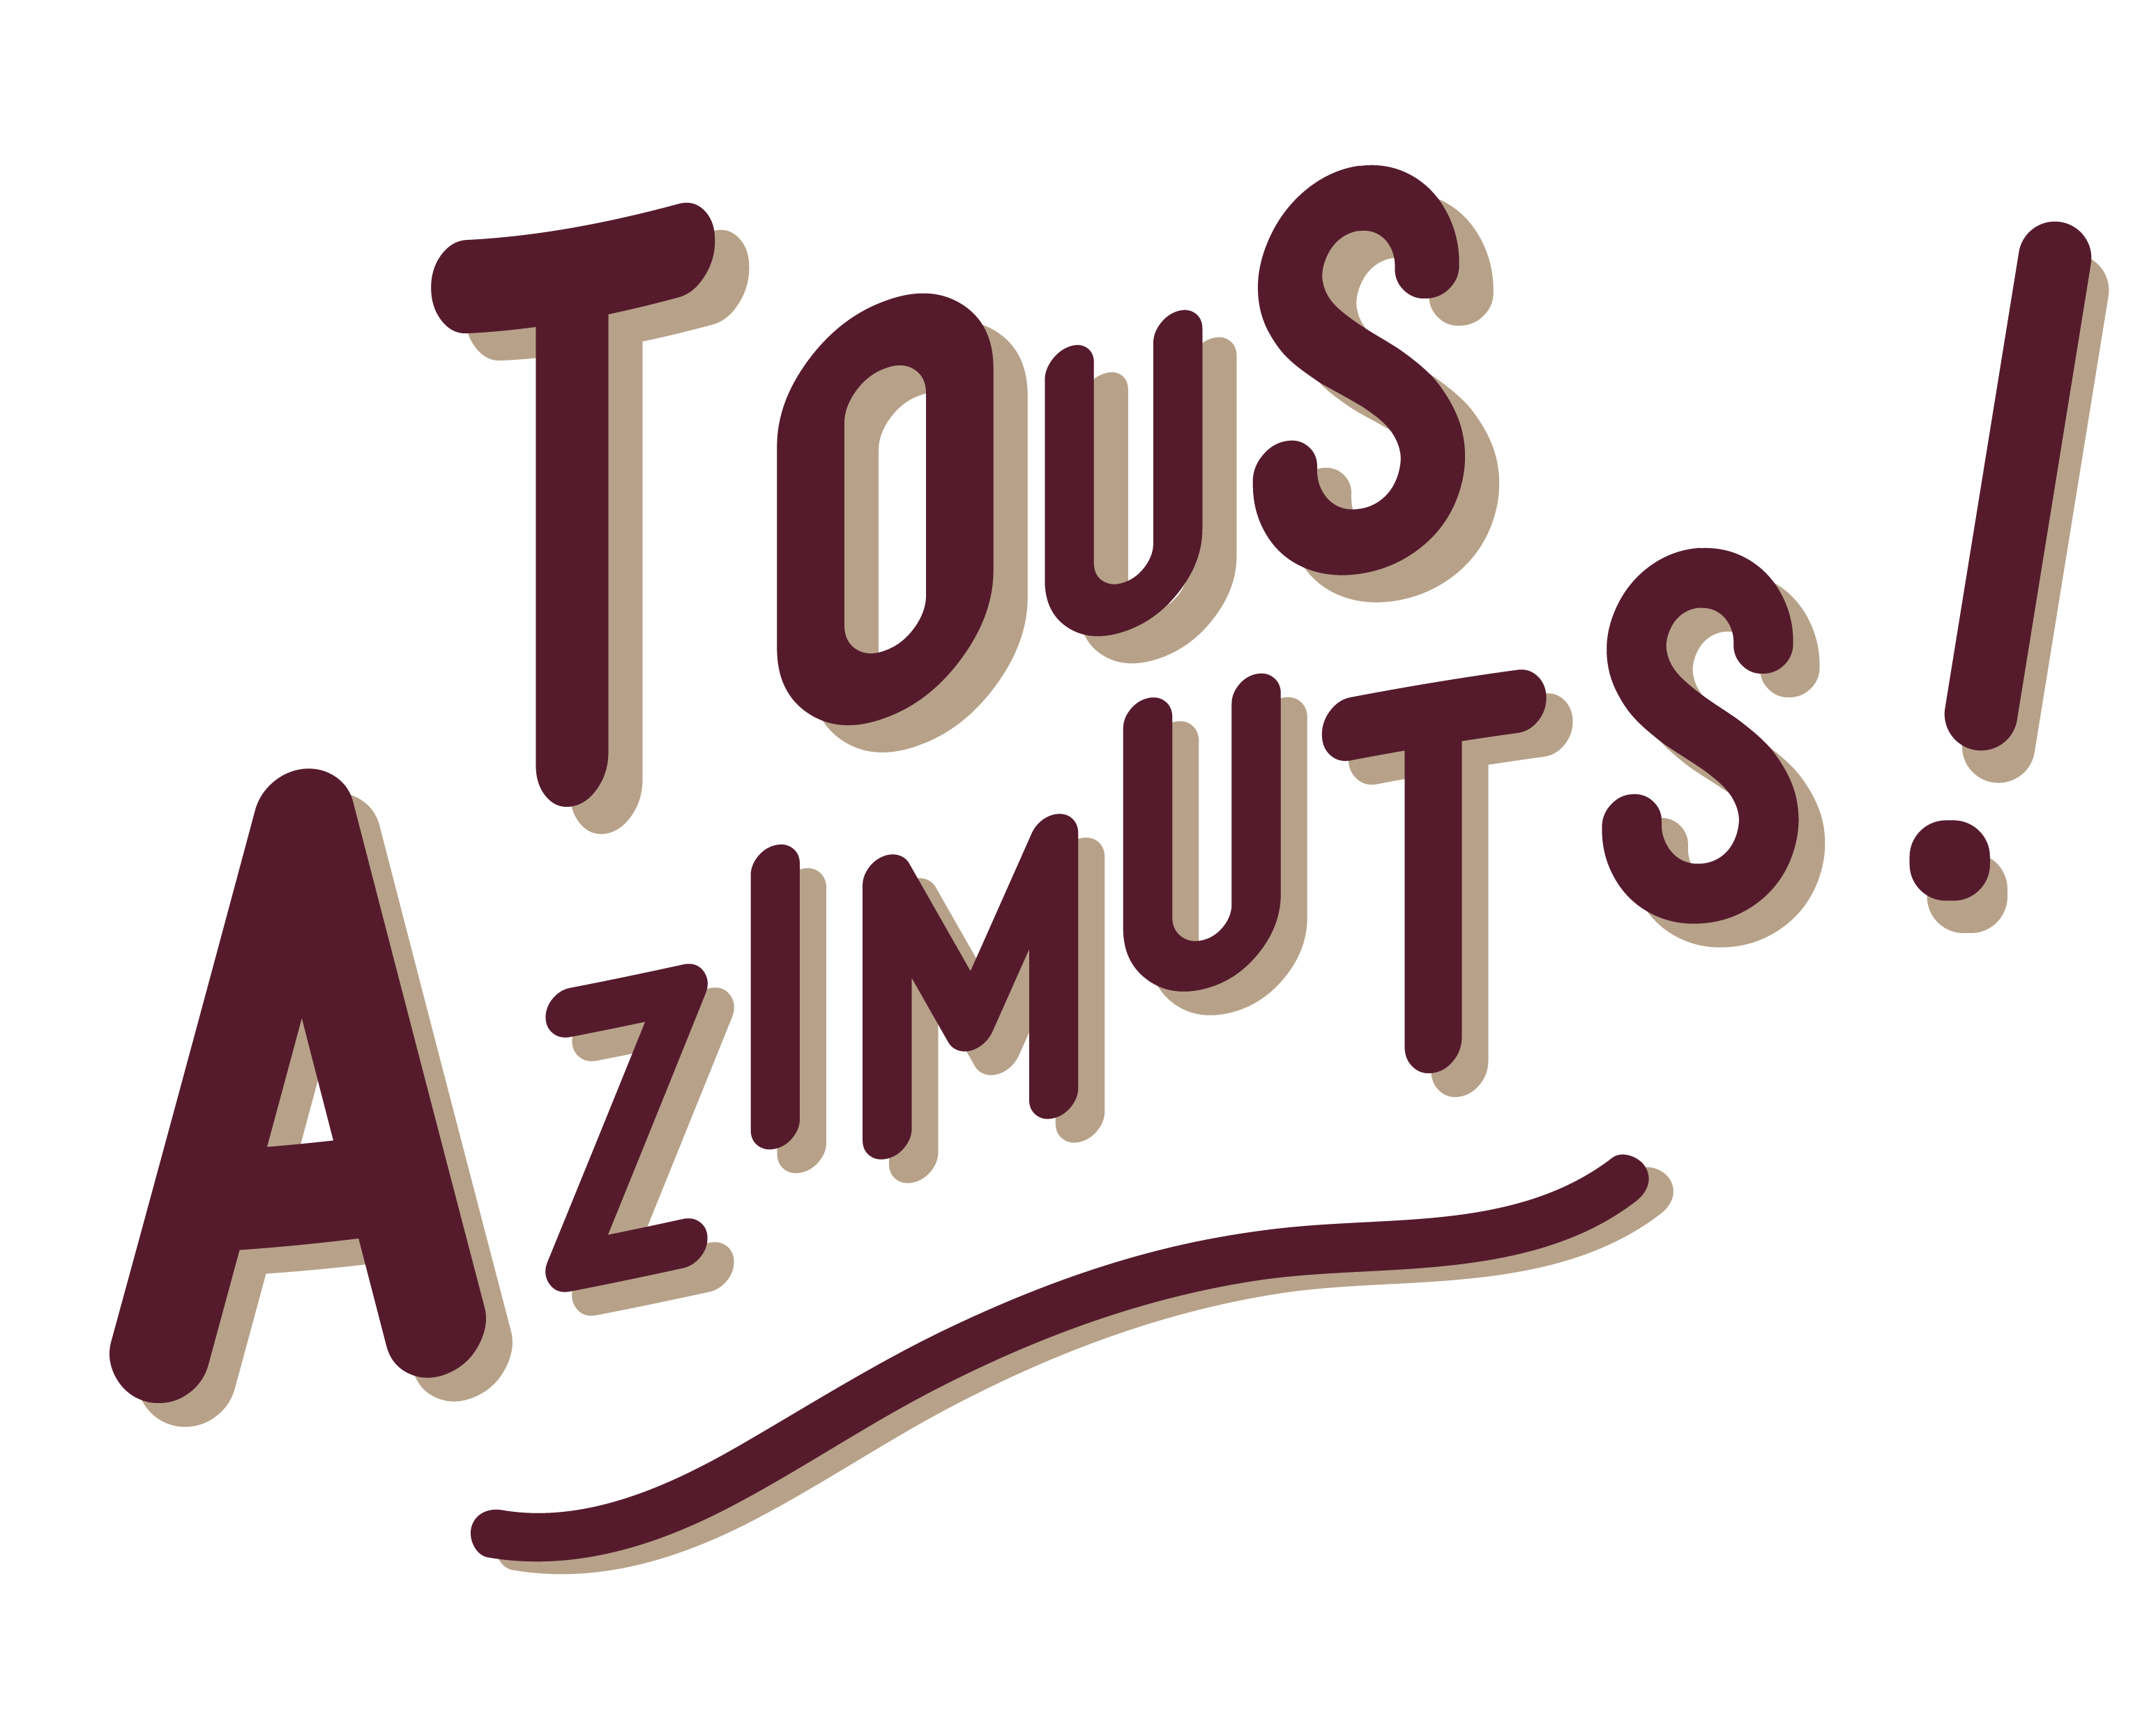 logo projet "Tous azimuts!"